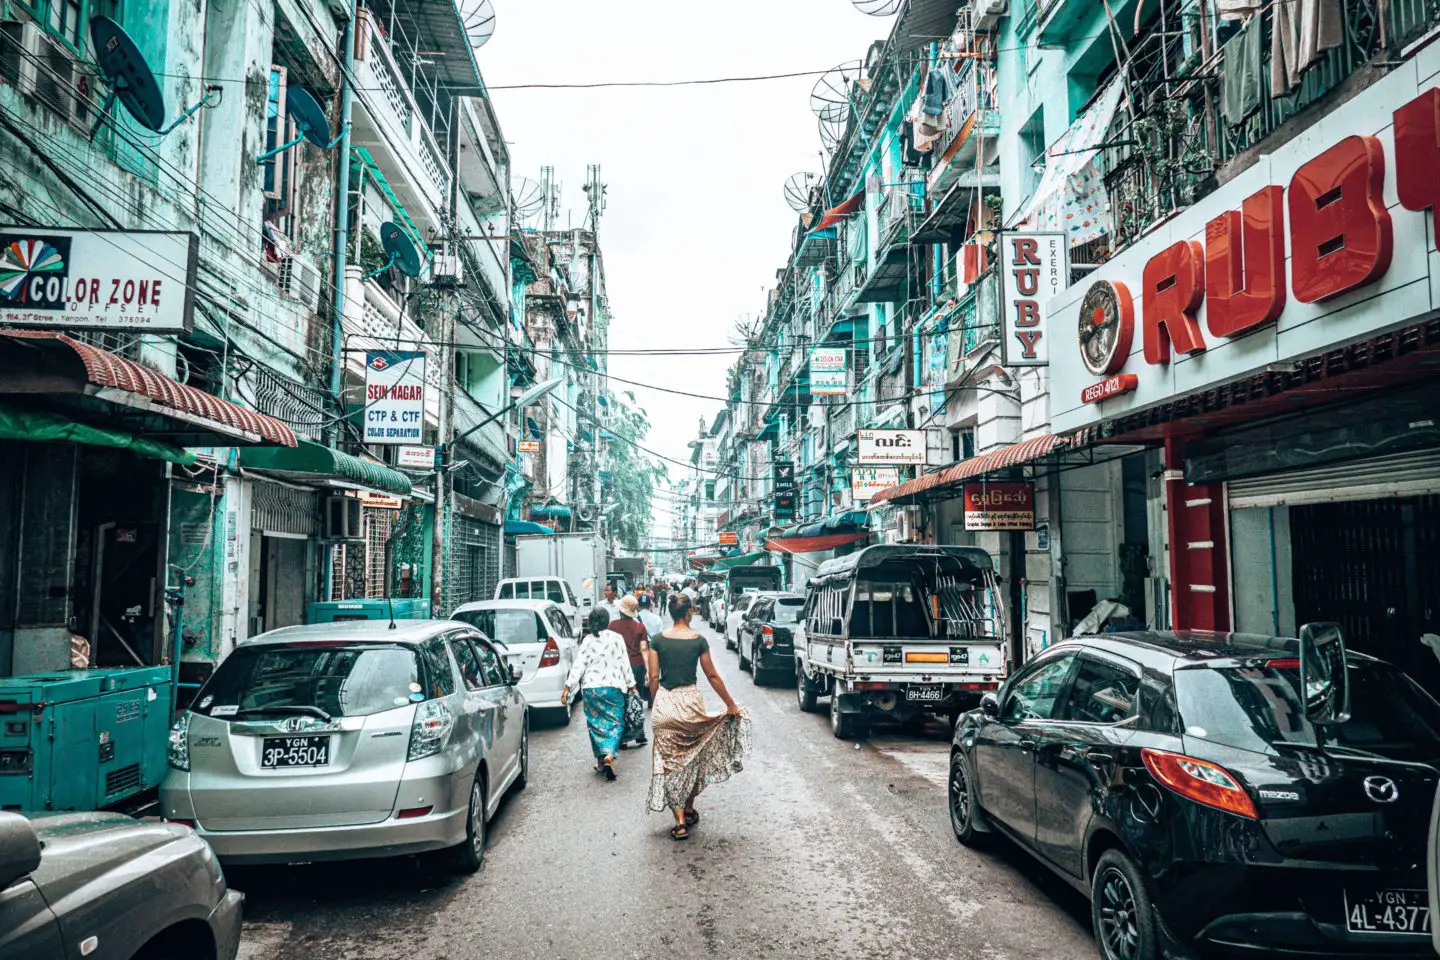 Yangon itinerary - 3 days in Yangon - wander the streets